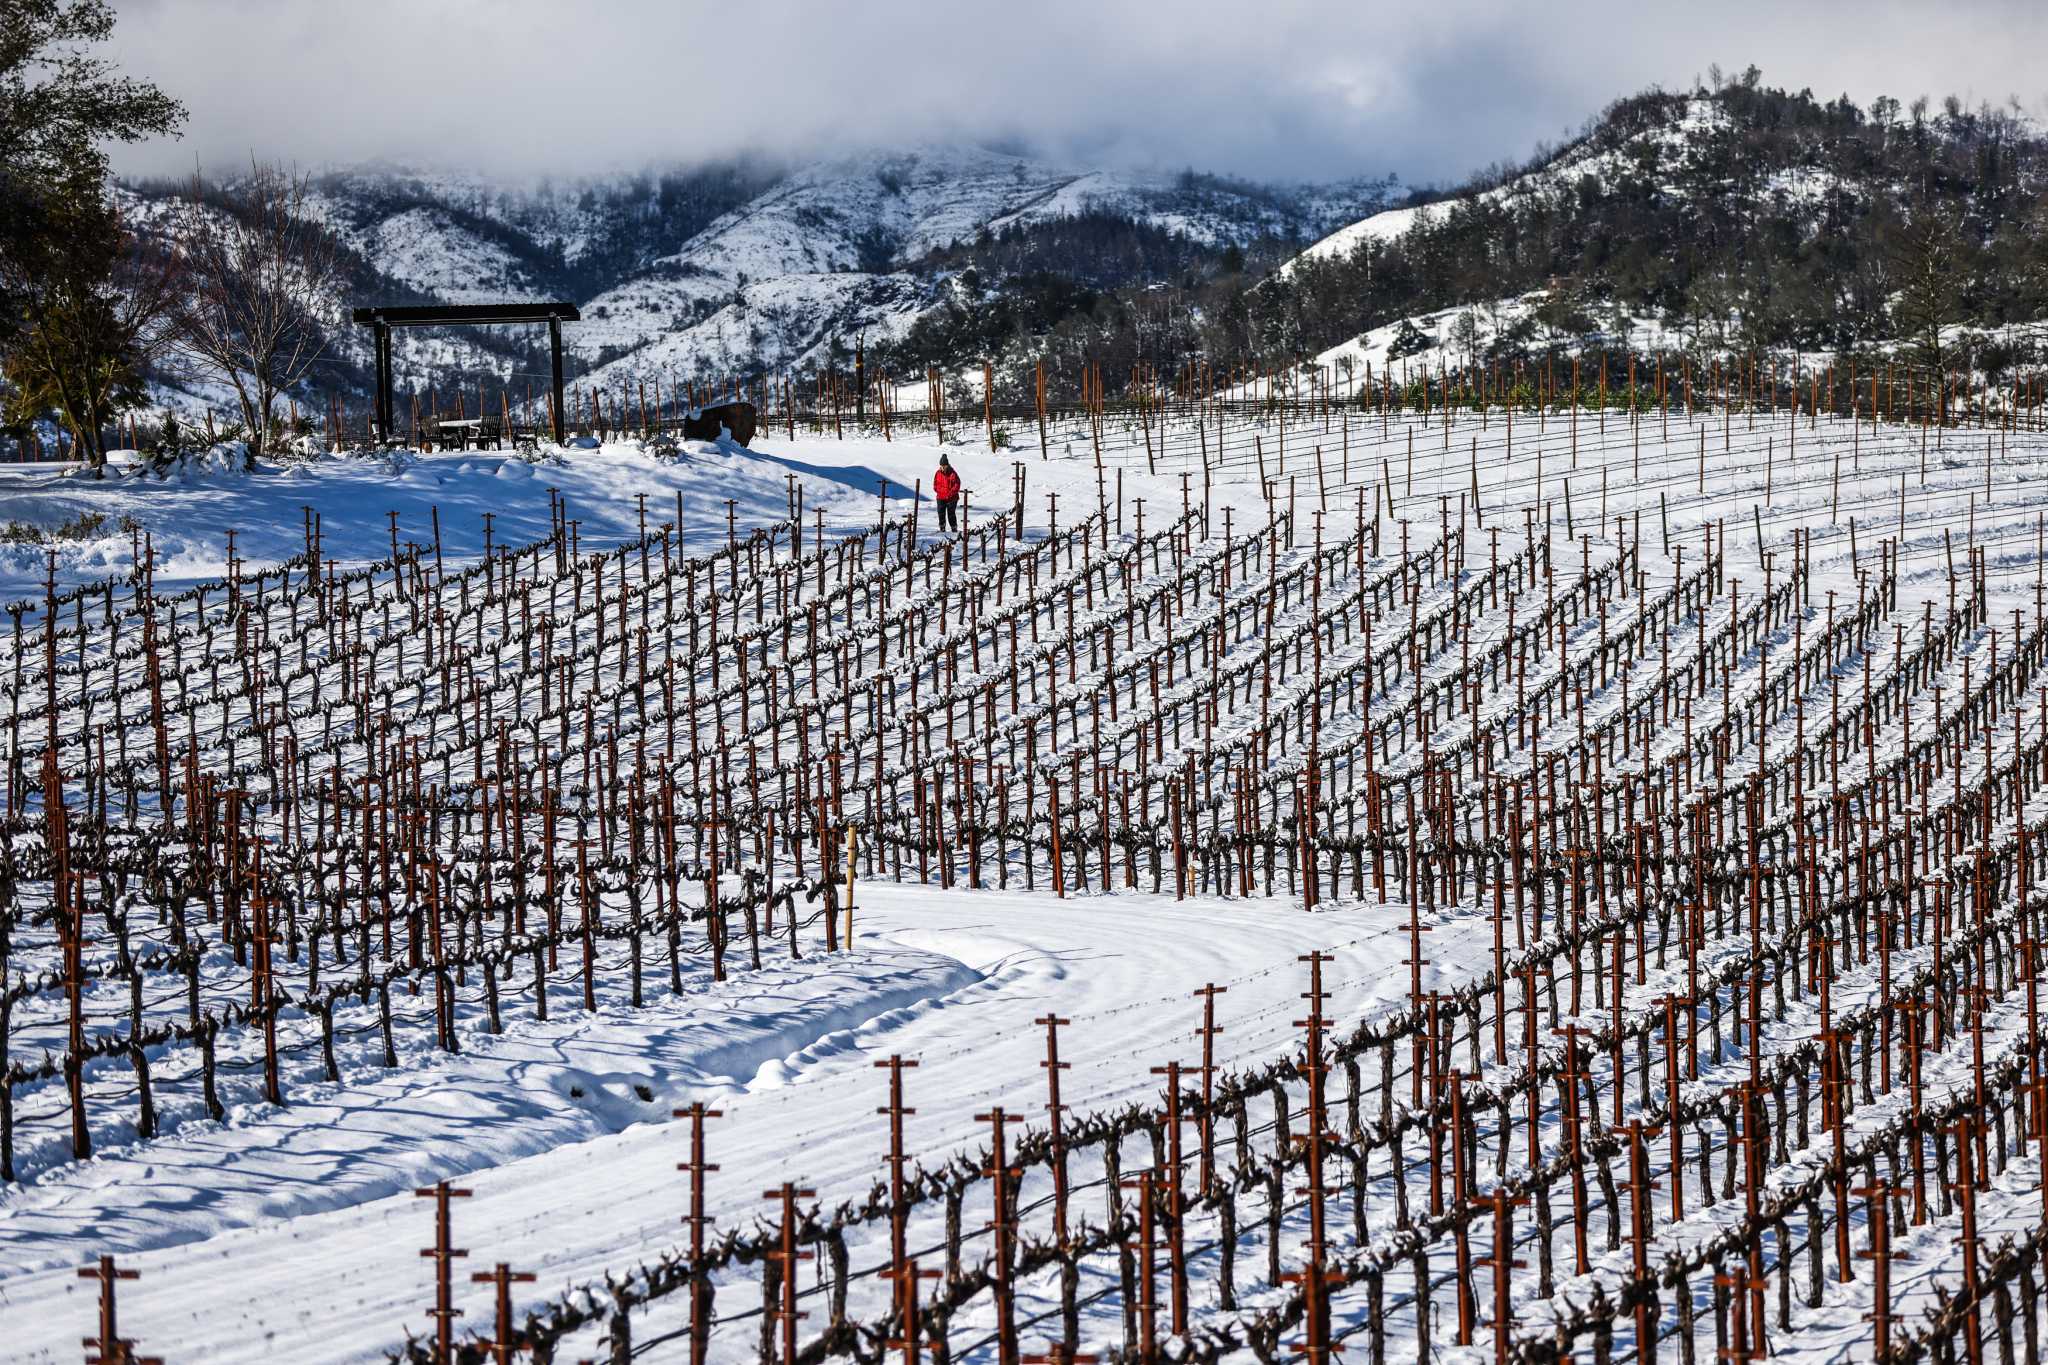 Napa Valley vineyards got historic snowfall on Friday